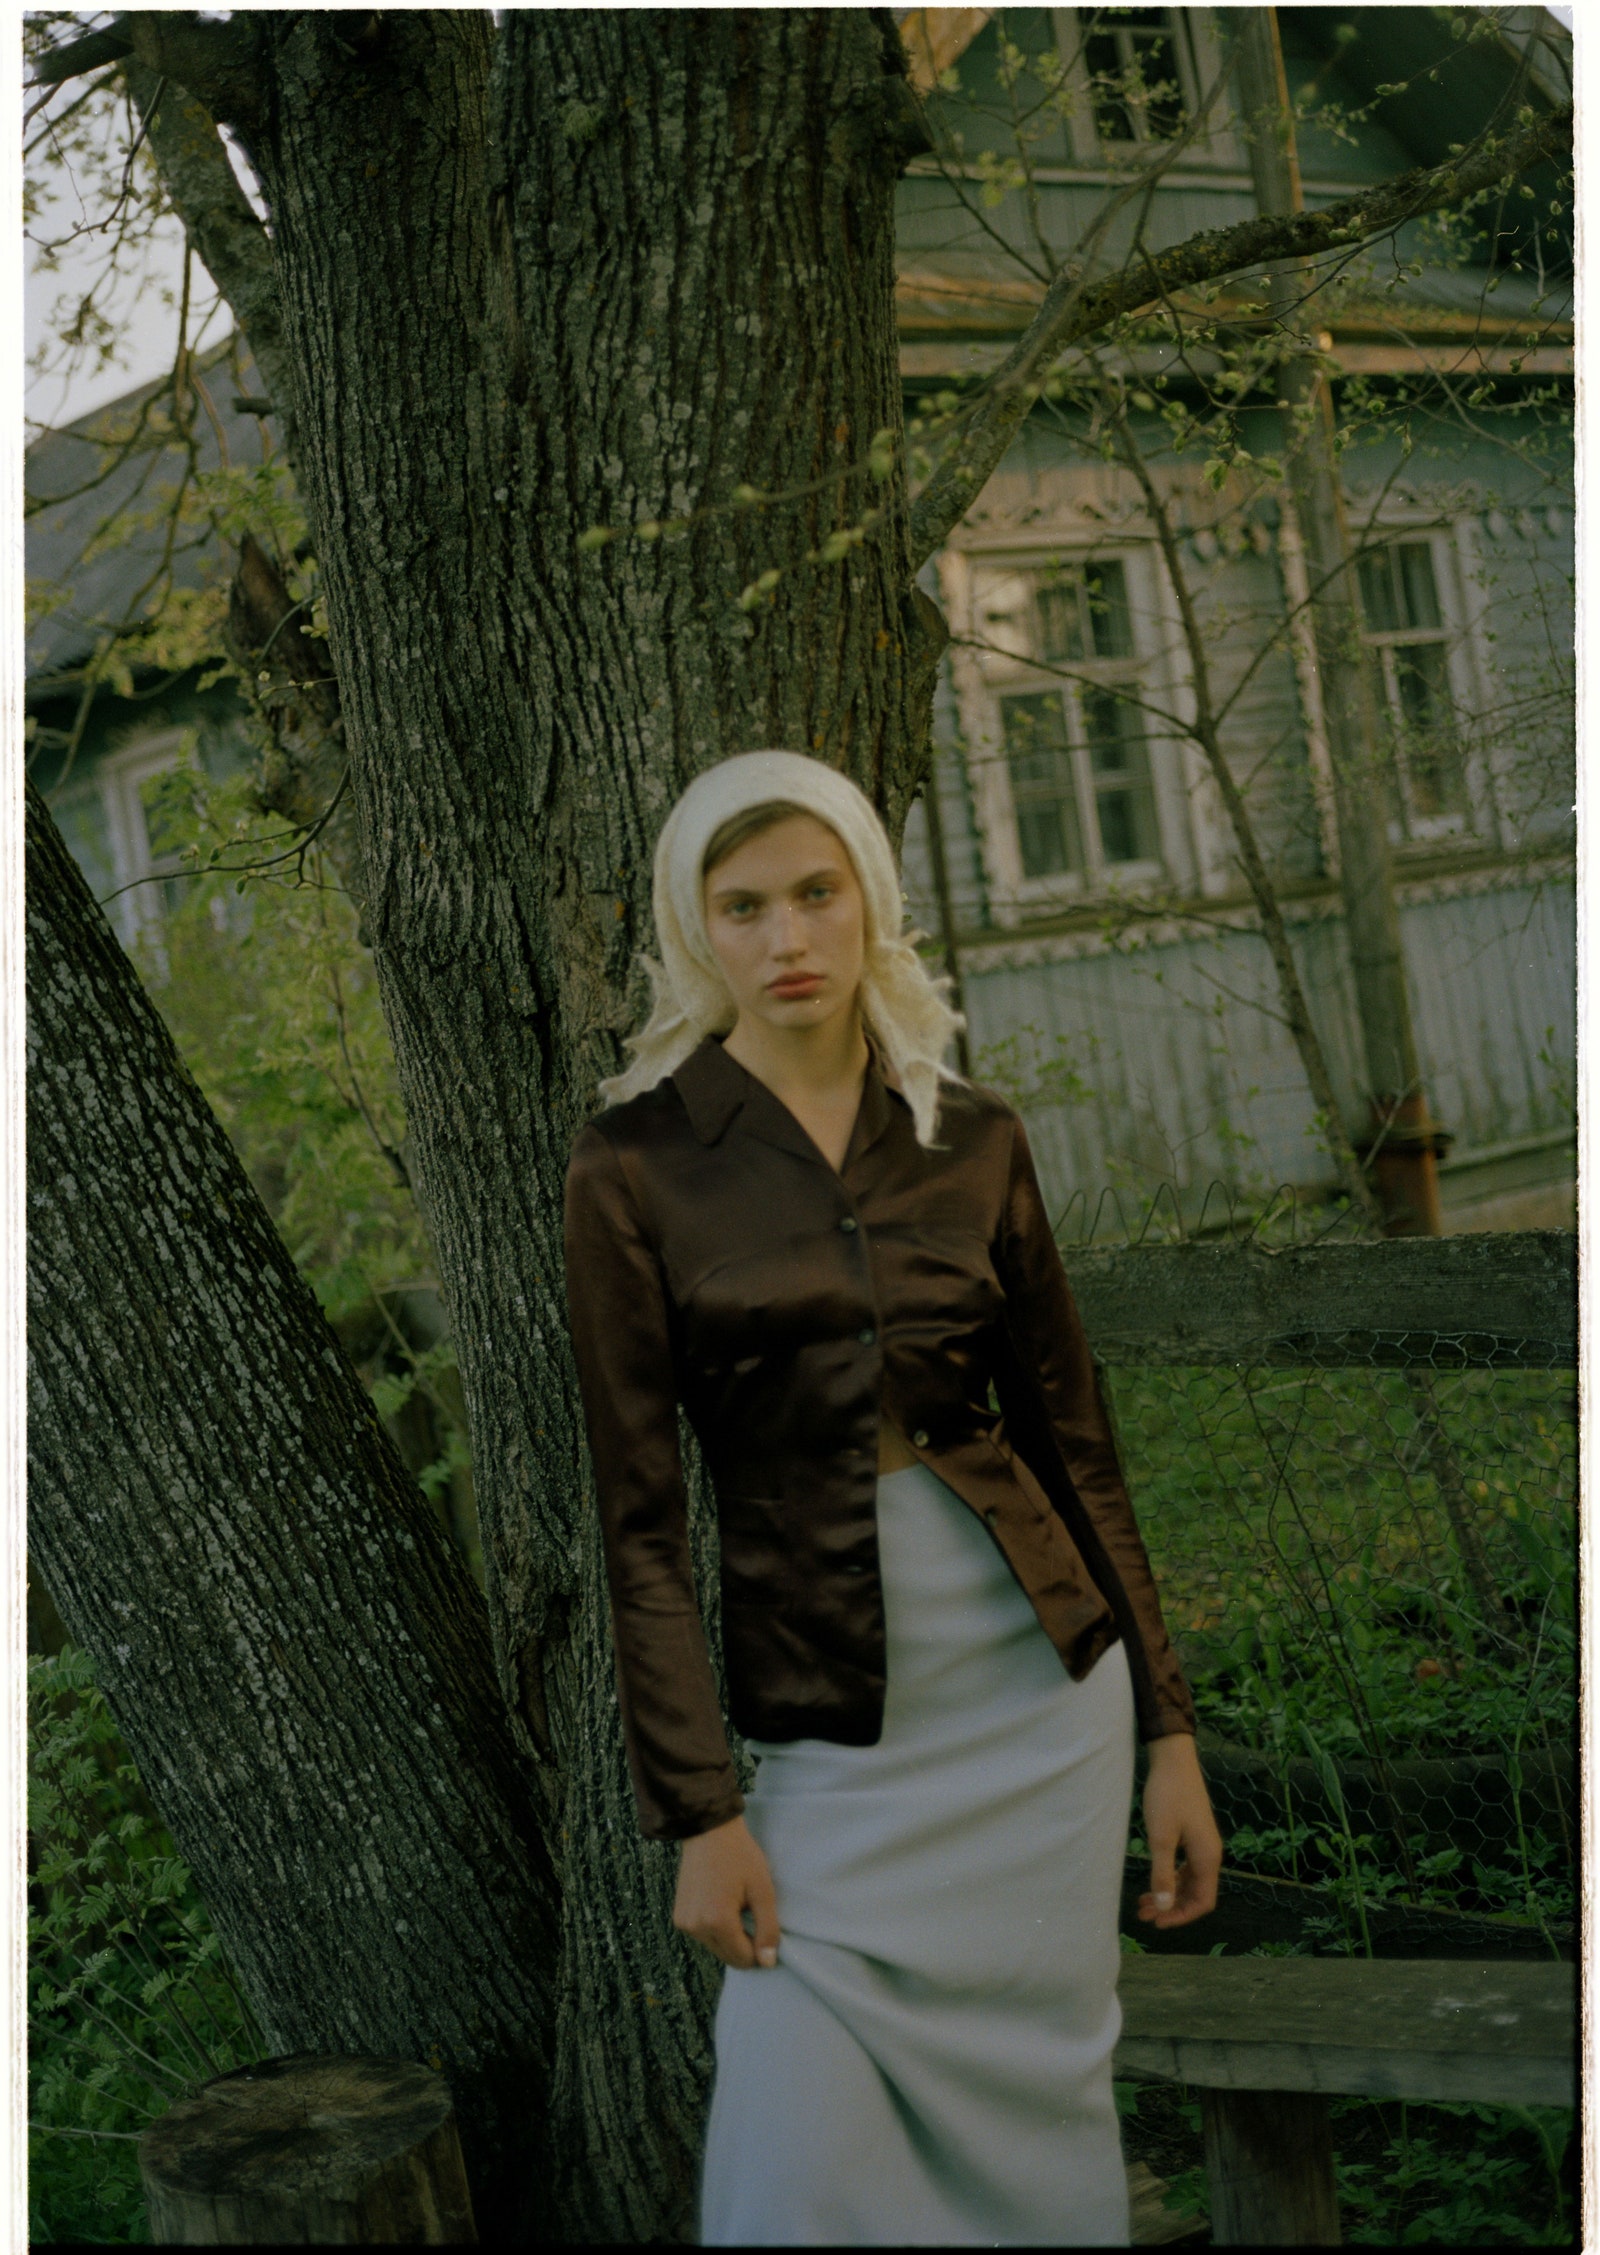 Рубашка Jil Sander юбка Kalmanovich пуховый платок — собственность бабушки стилиста